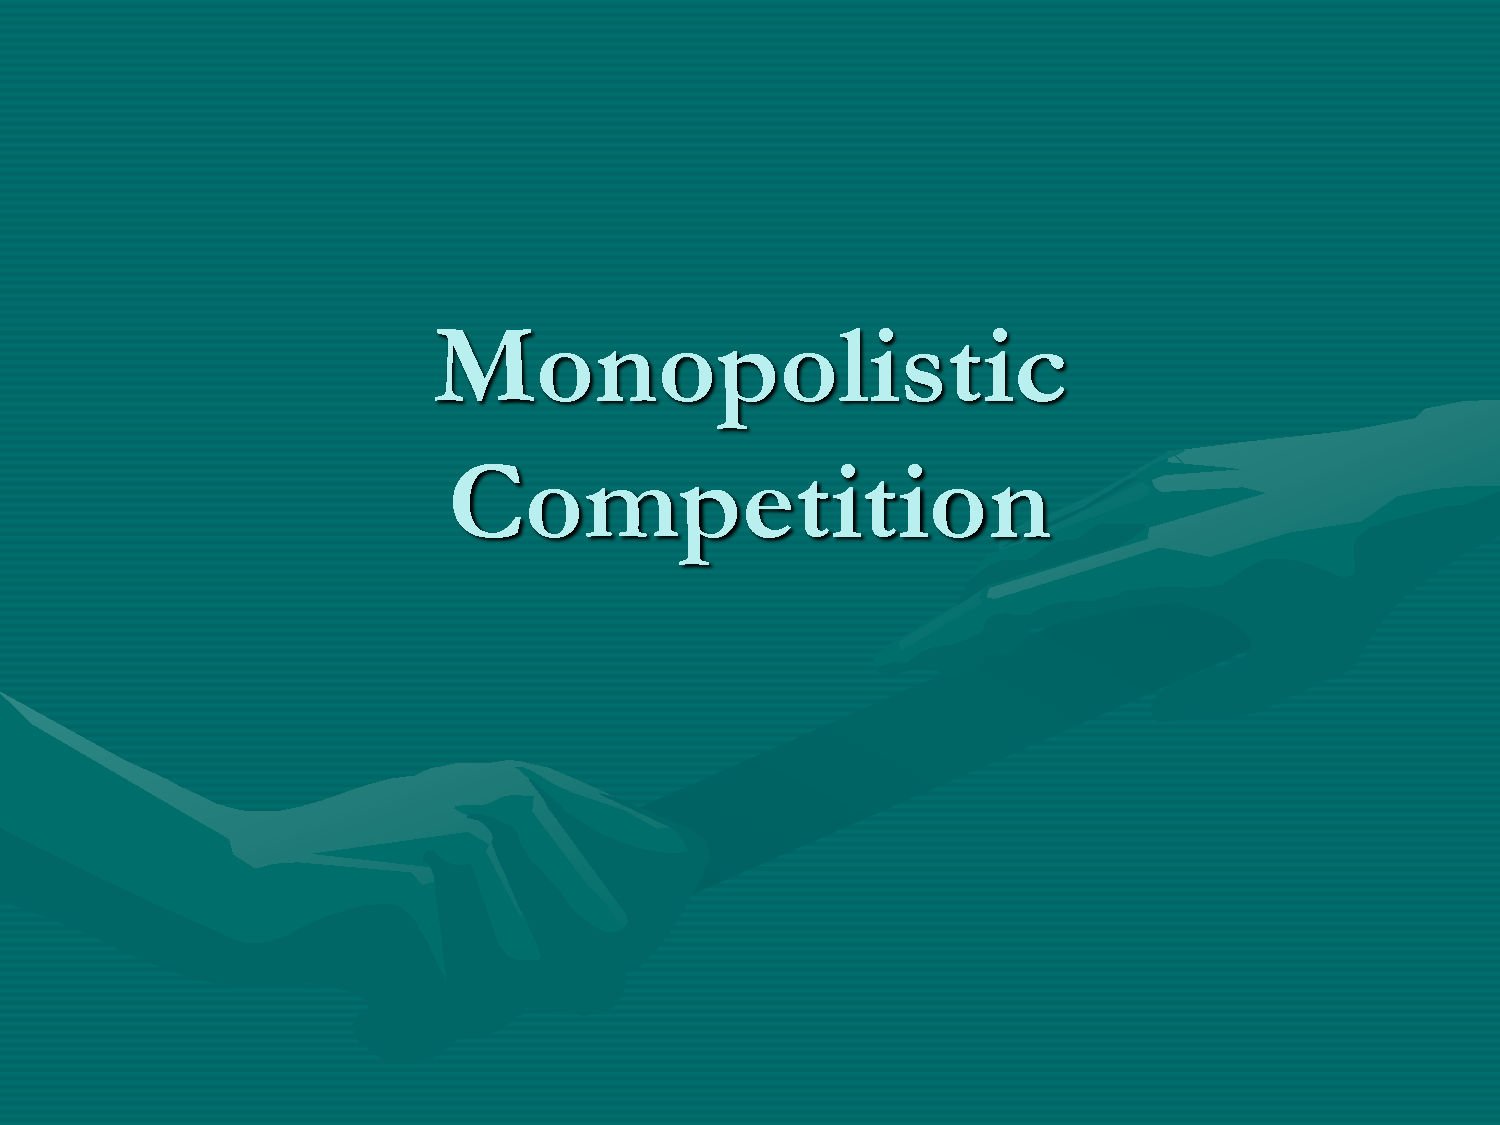 Define monopolistic competition